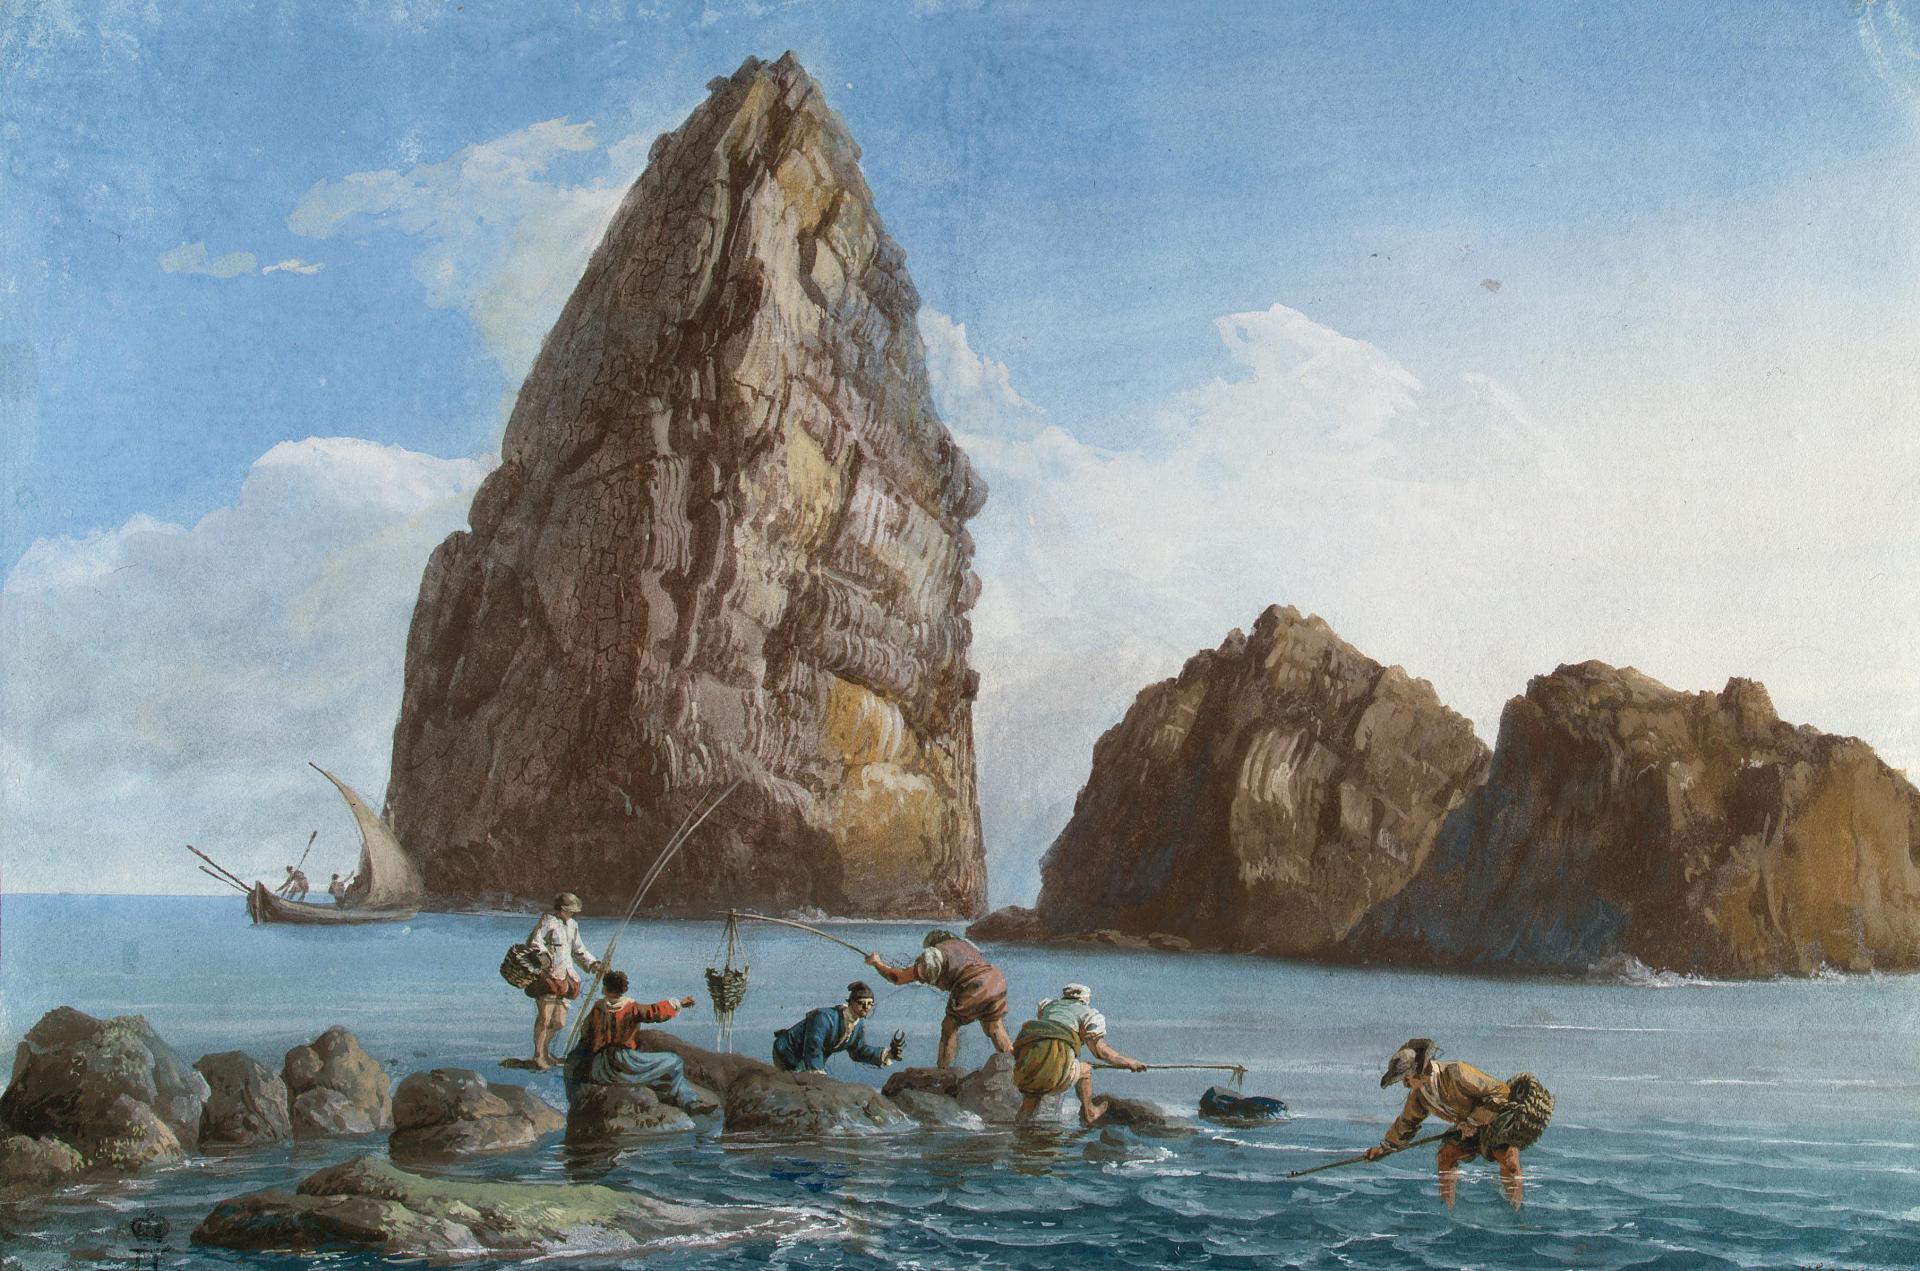 Жан-Пьер-Луи-Лоран Уэль. "Вид скал третьего острова Циклопов". Между 1776-1779. Эрмитаж, Санкт-Петербург.